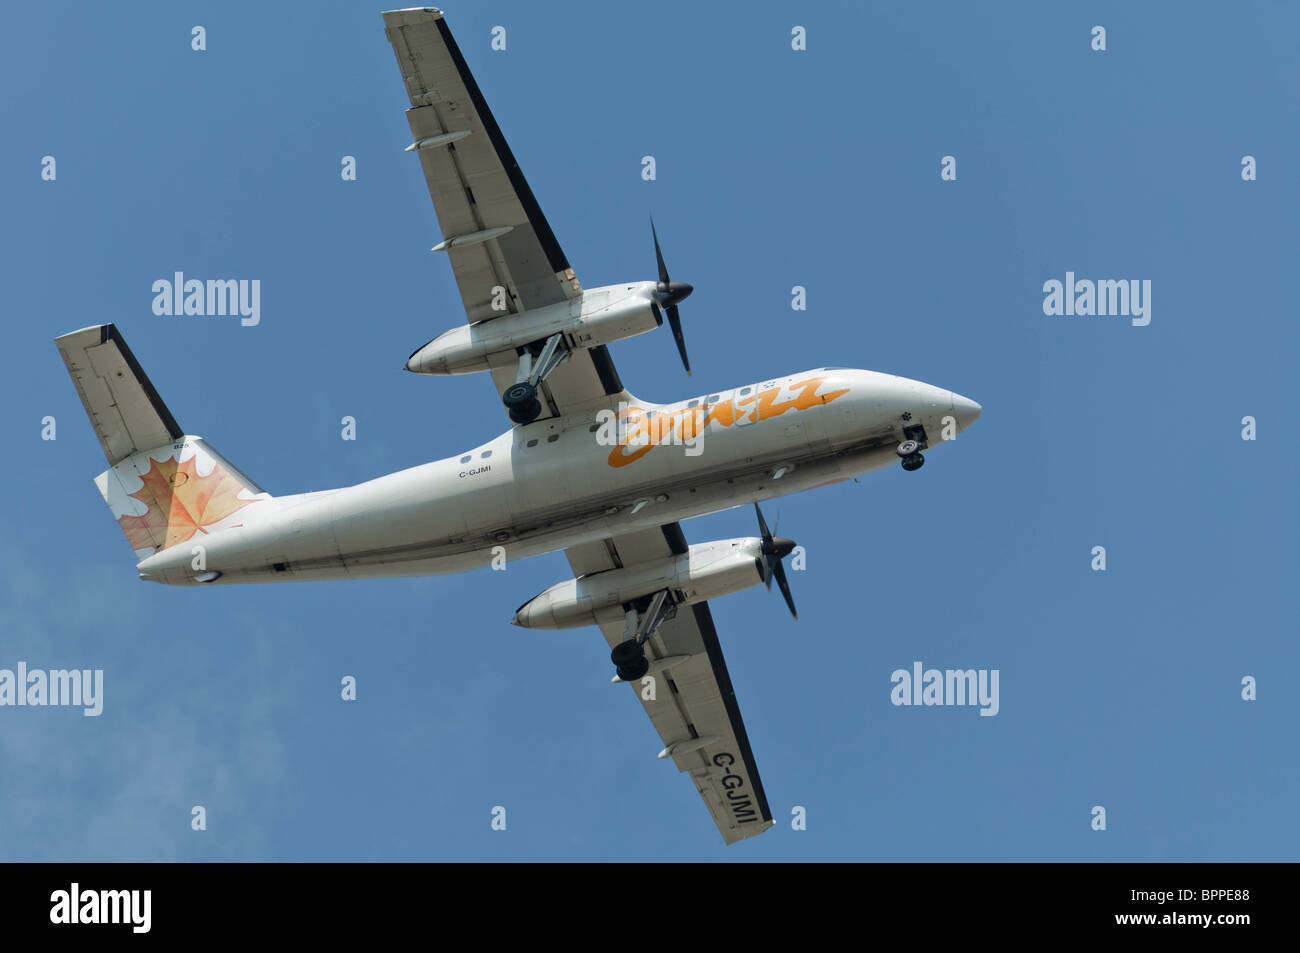 turboprop passenger aircraft landing gear down Stock Photo